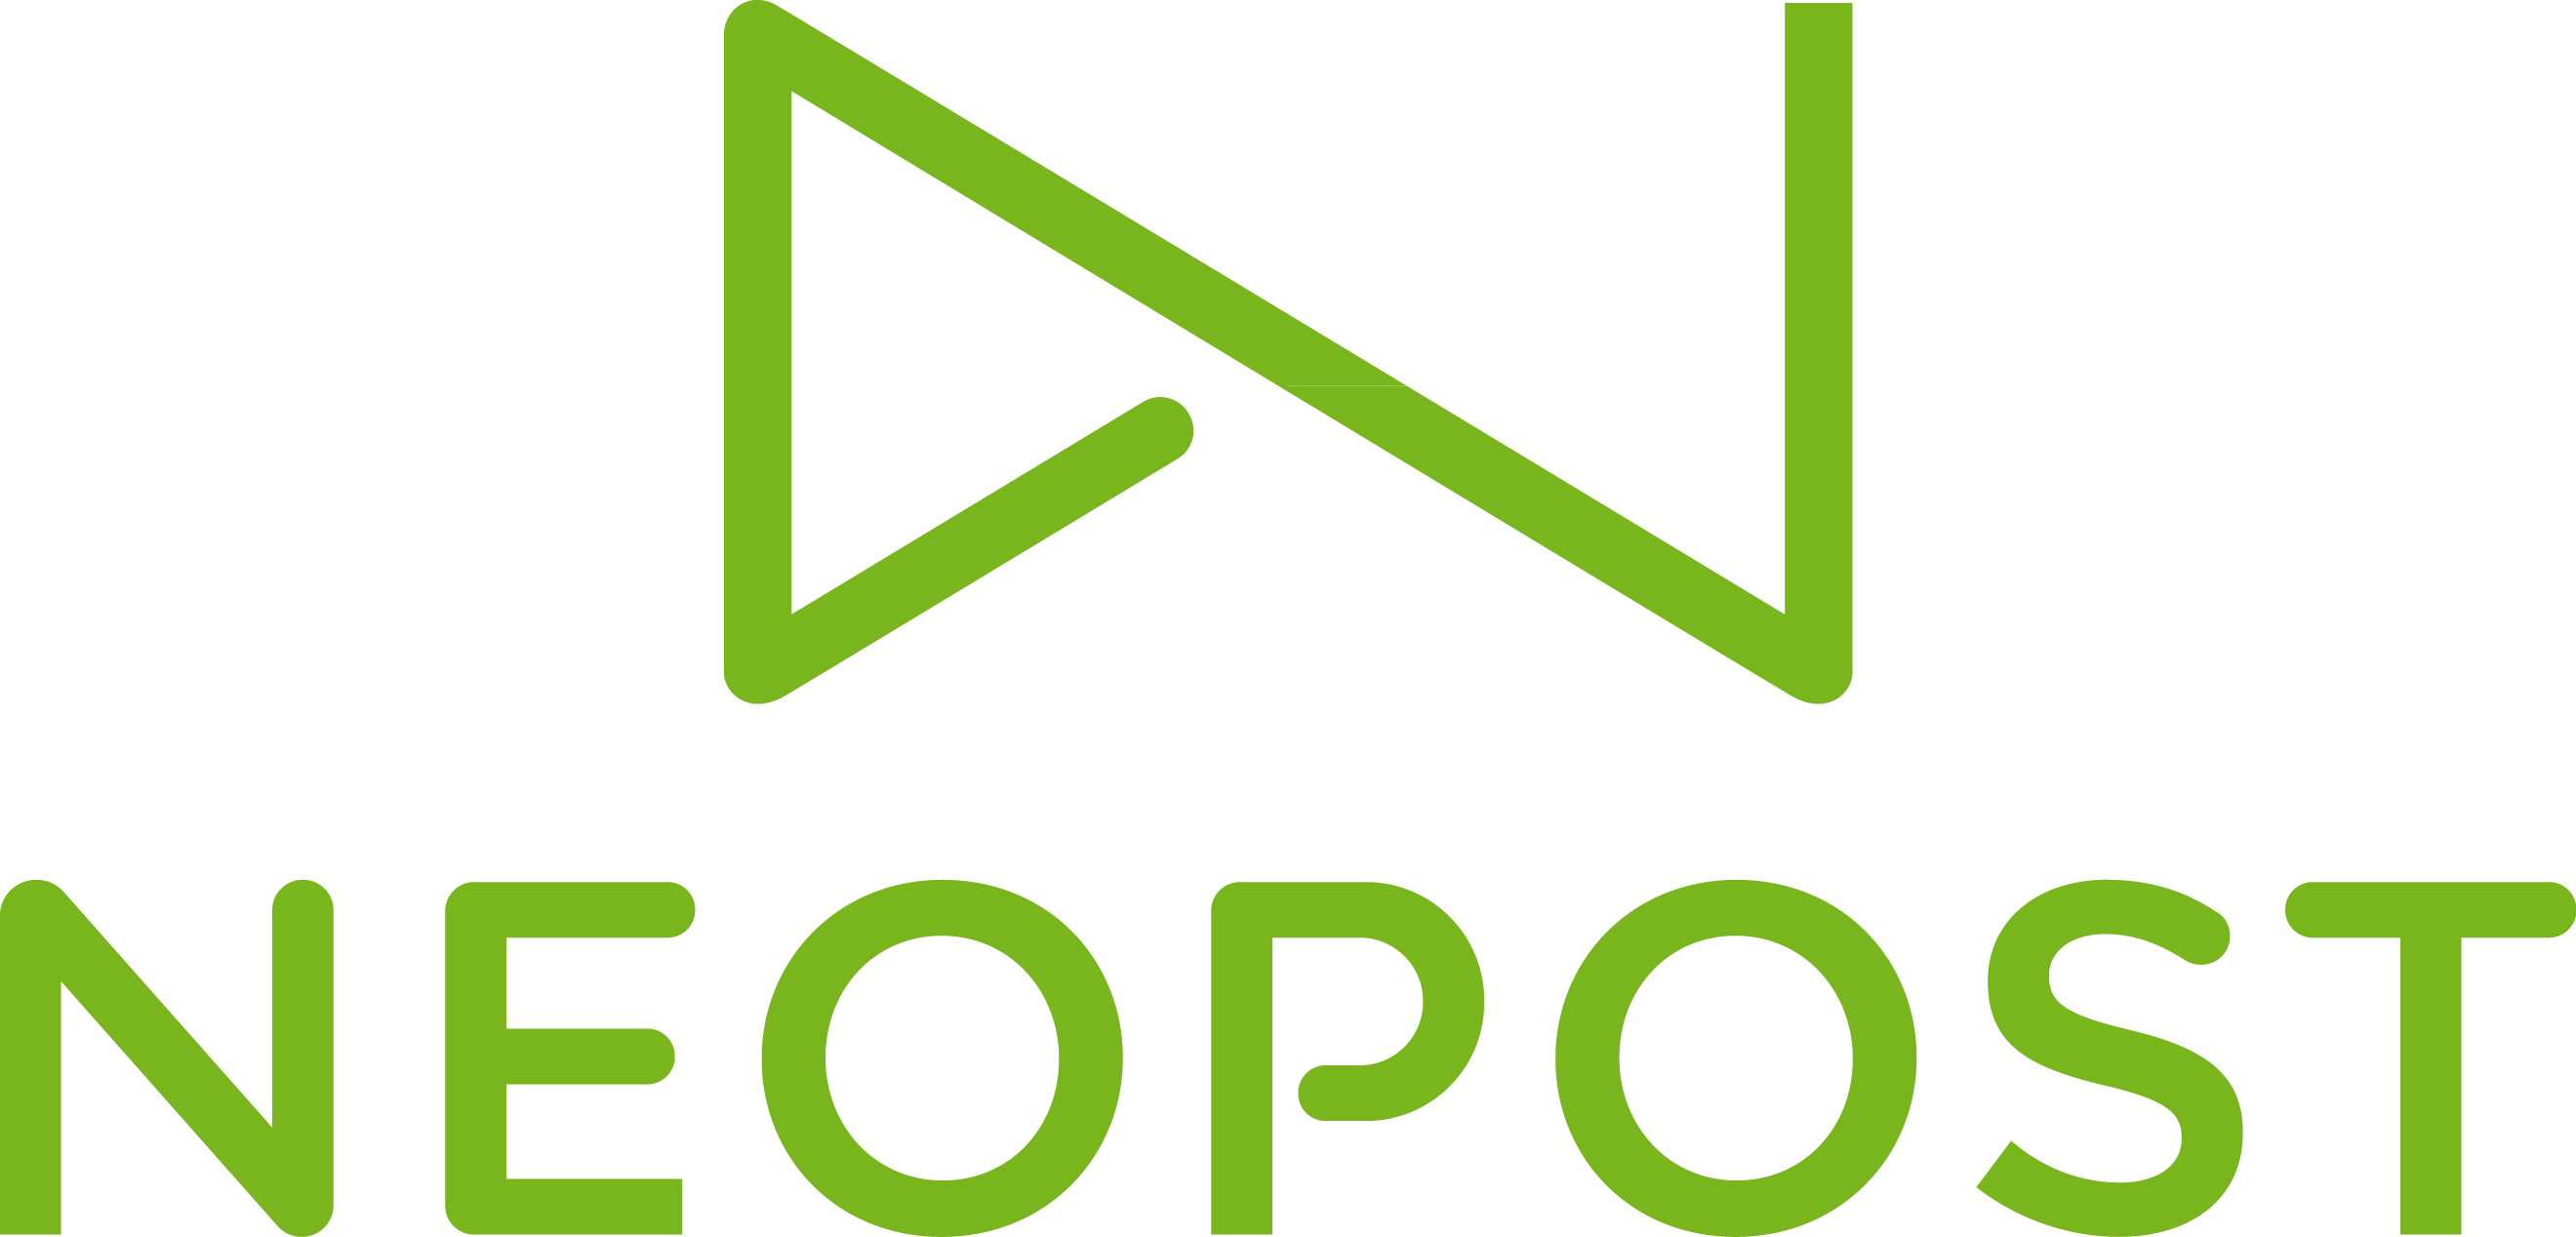 Neopost logo